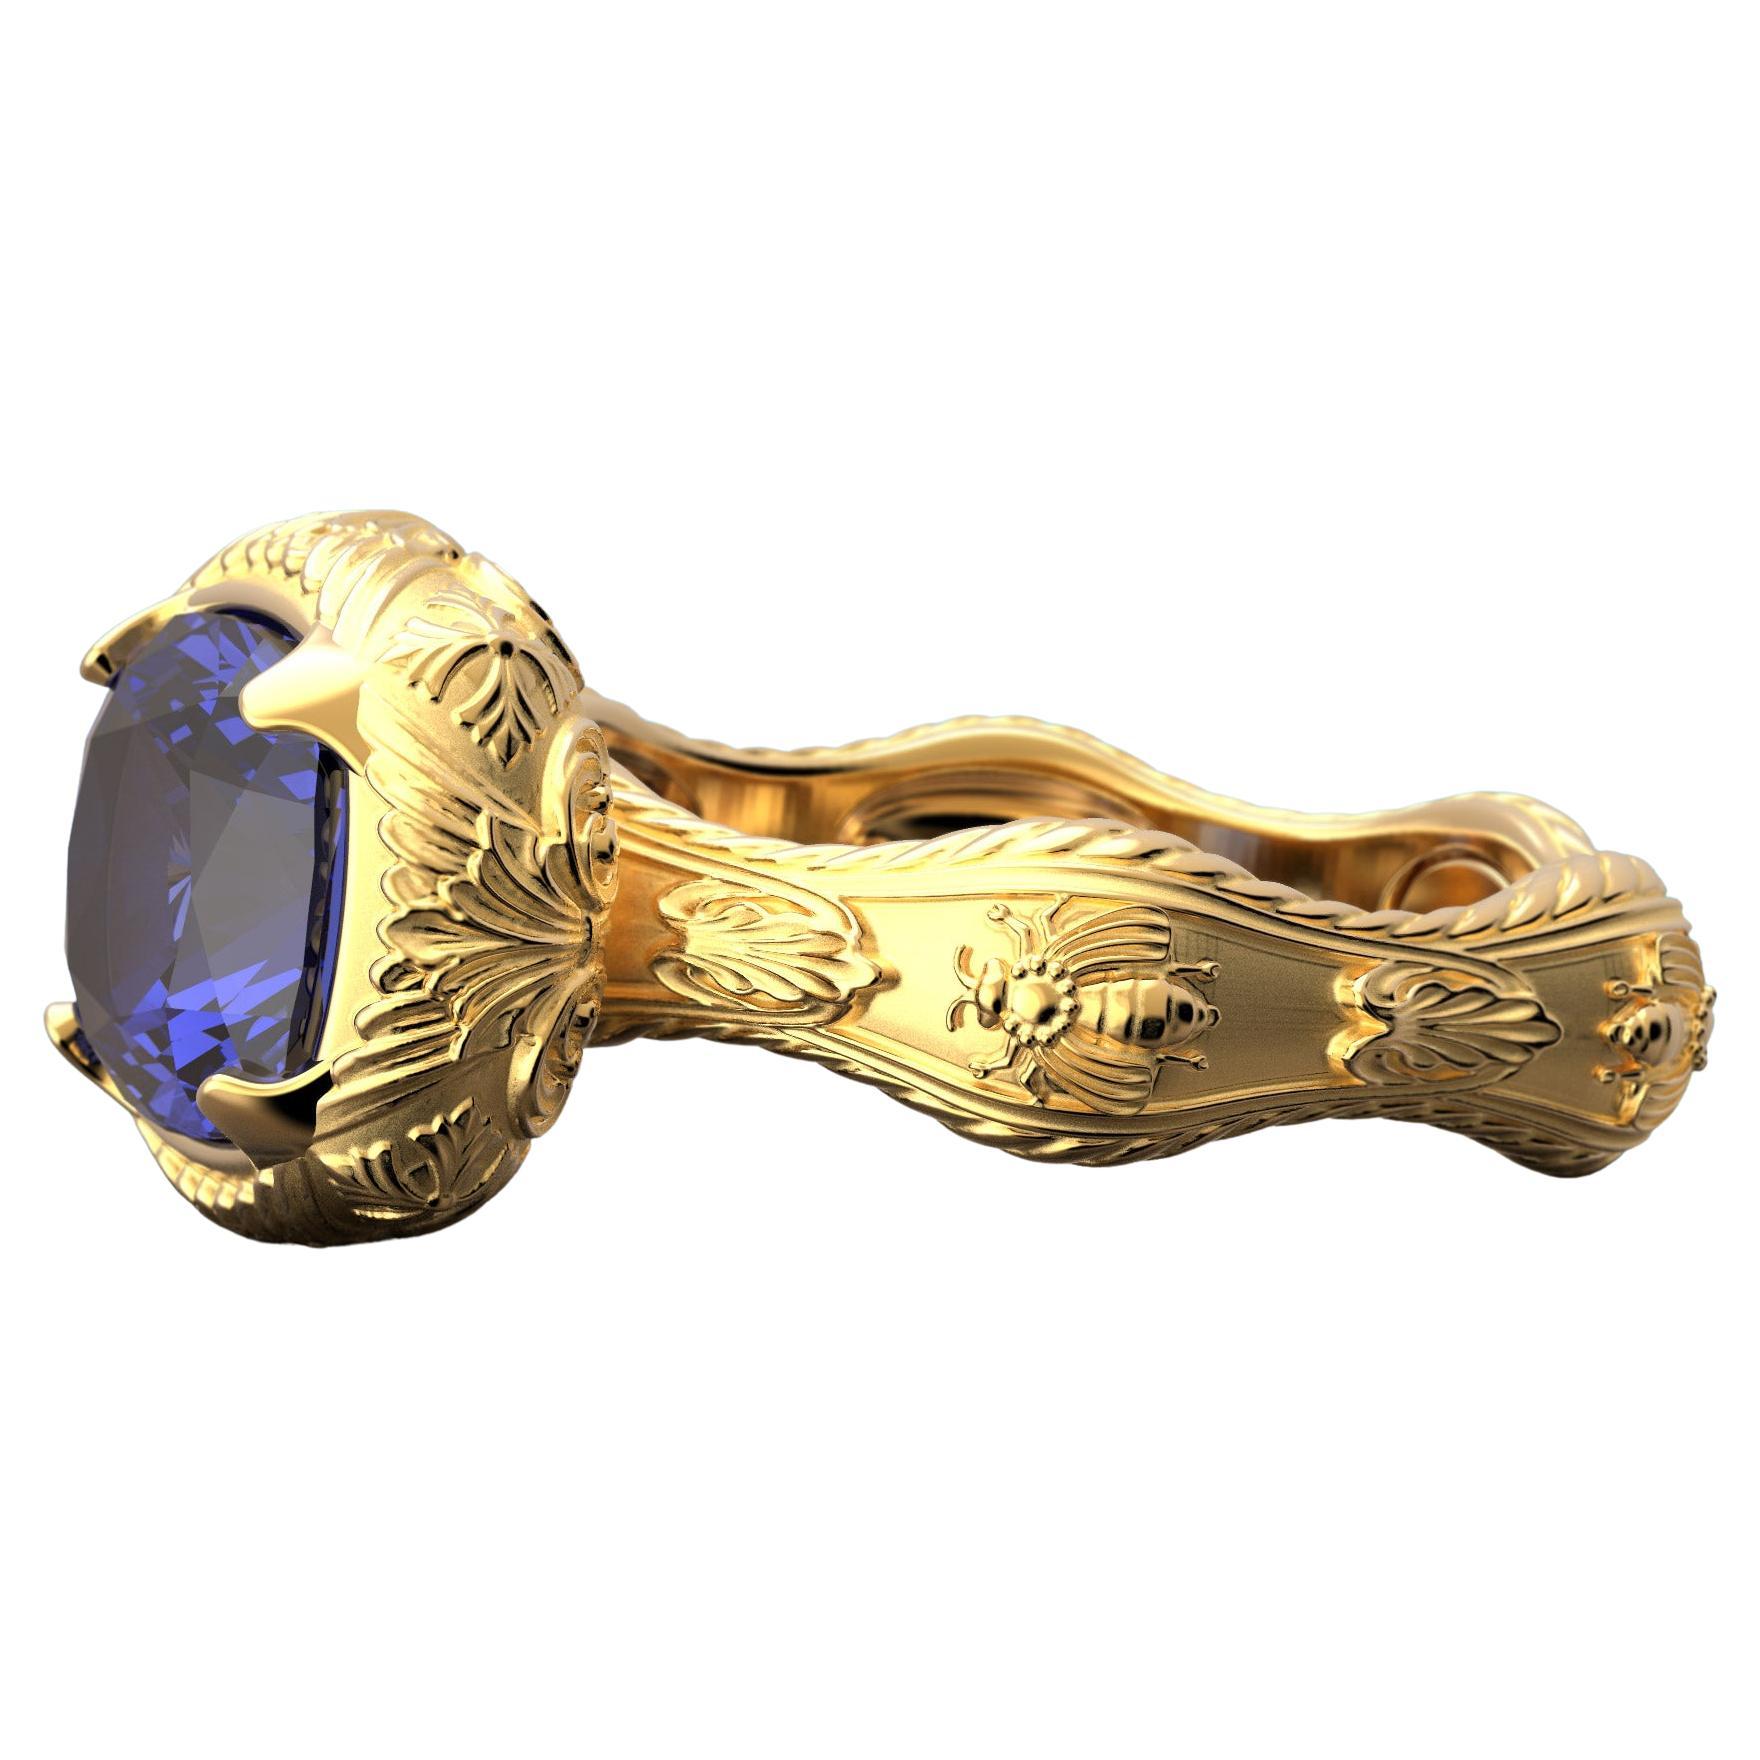 Tanzanite Ring Made In Italy by Oltremare Gioielli in 18k genuine gold